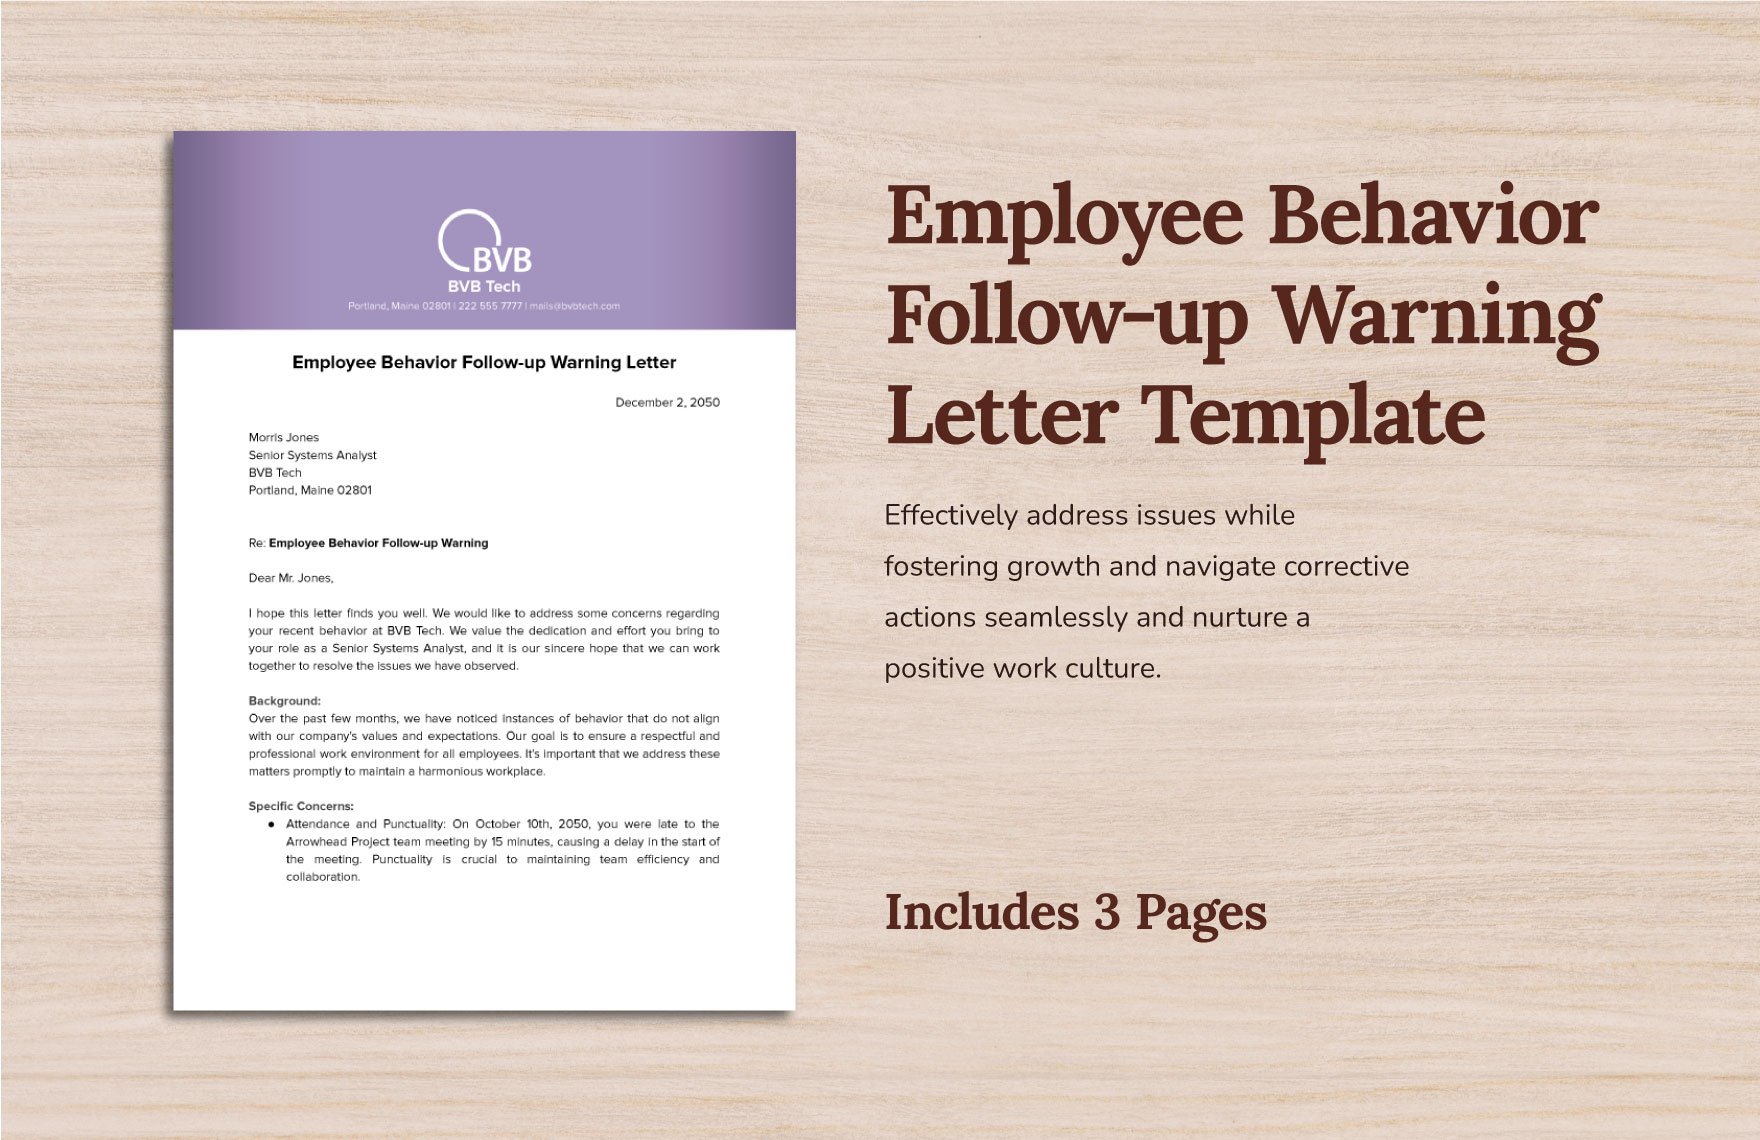 Employee Behavior Follow-up Warning Letter Template